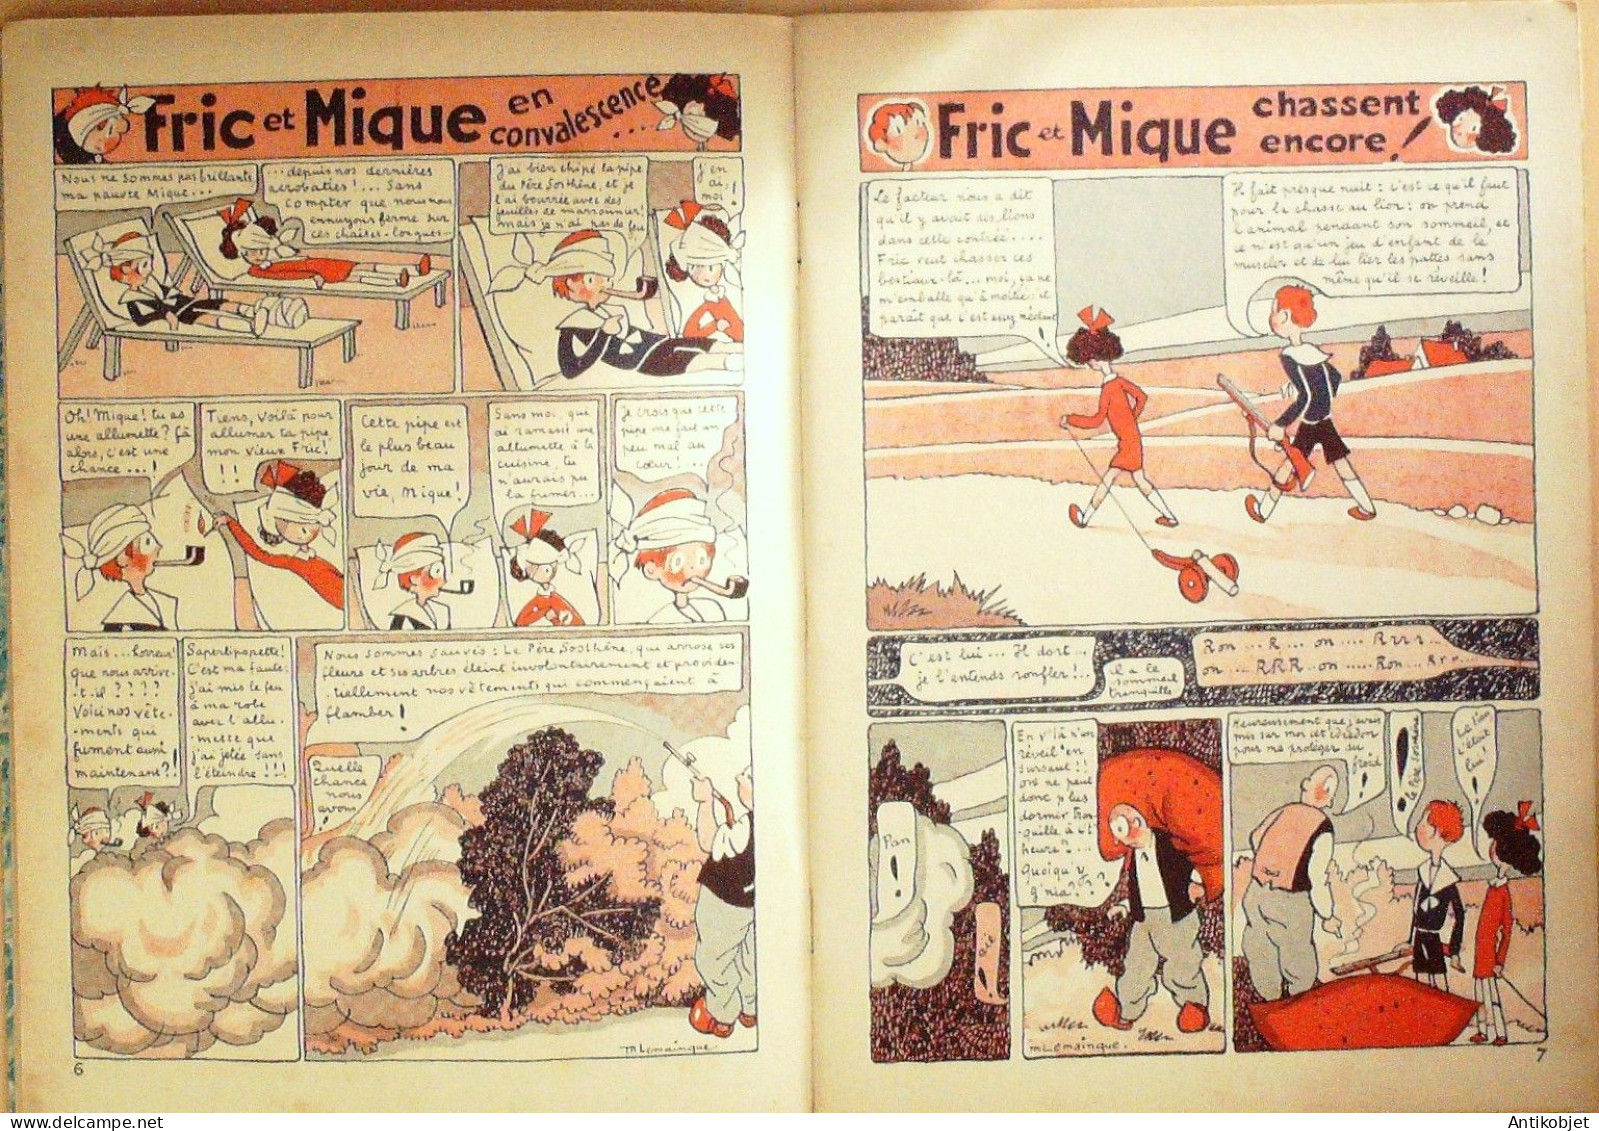 Fric & Mique Illustrations Lemainque 1932 - 5. Guerras Mundiales